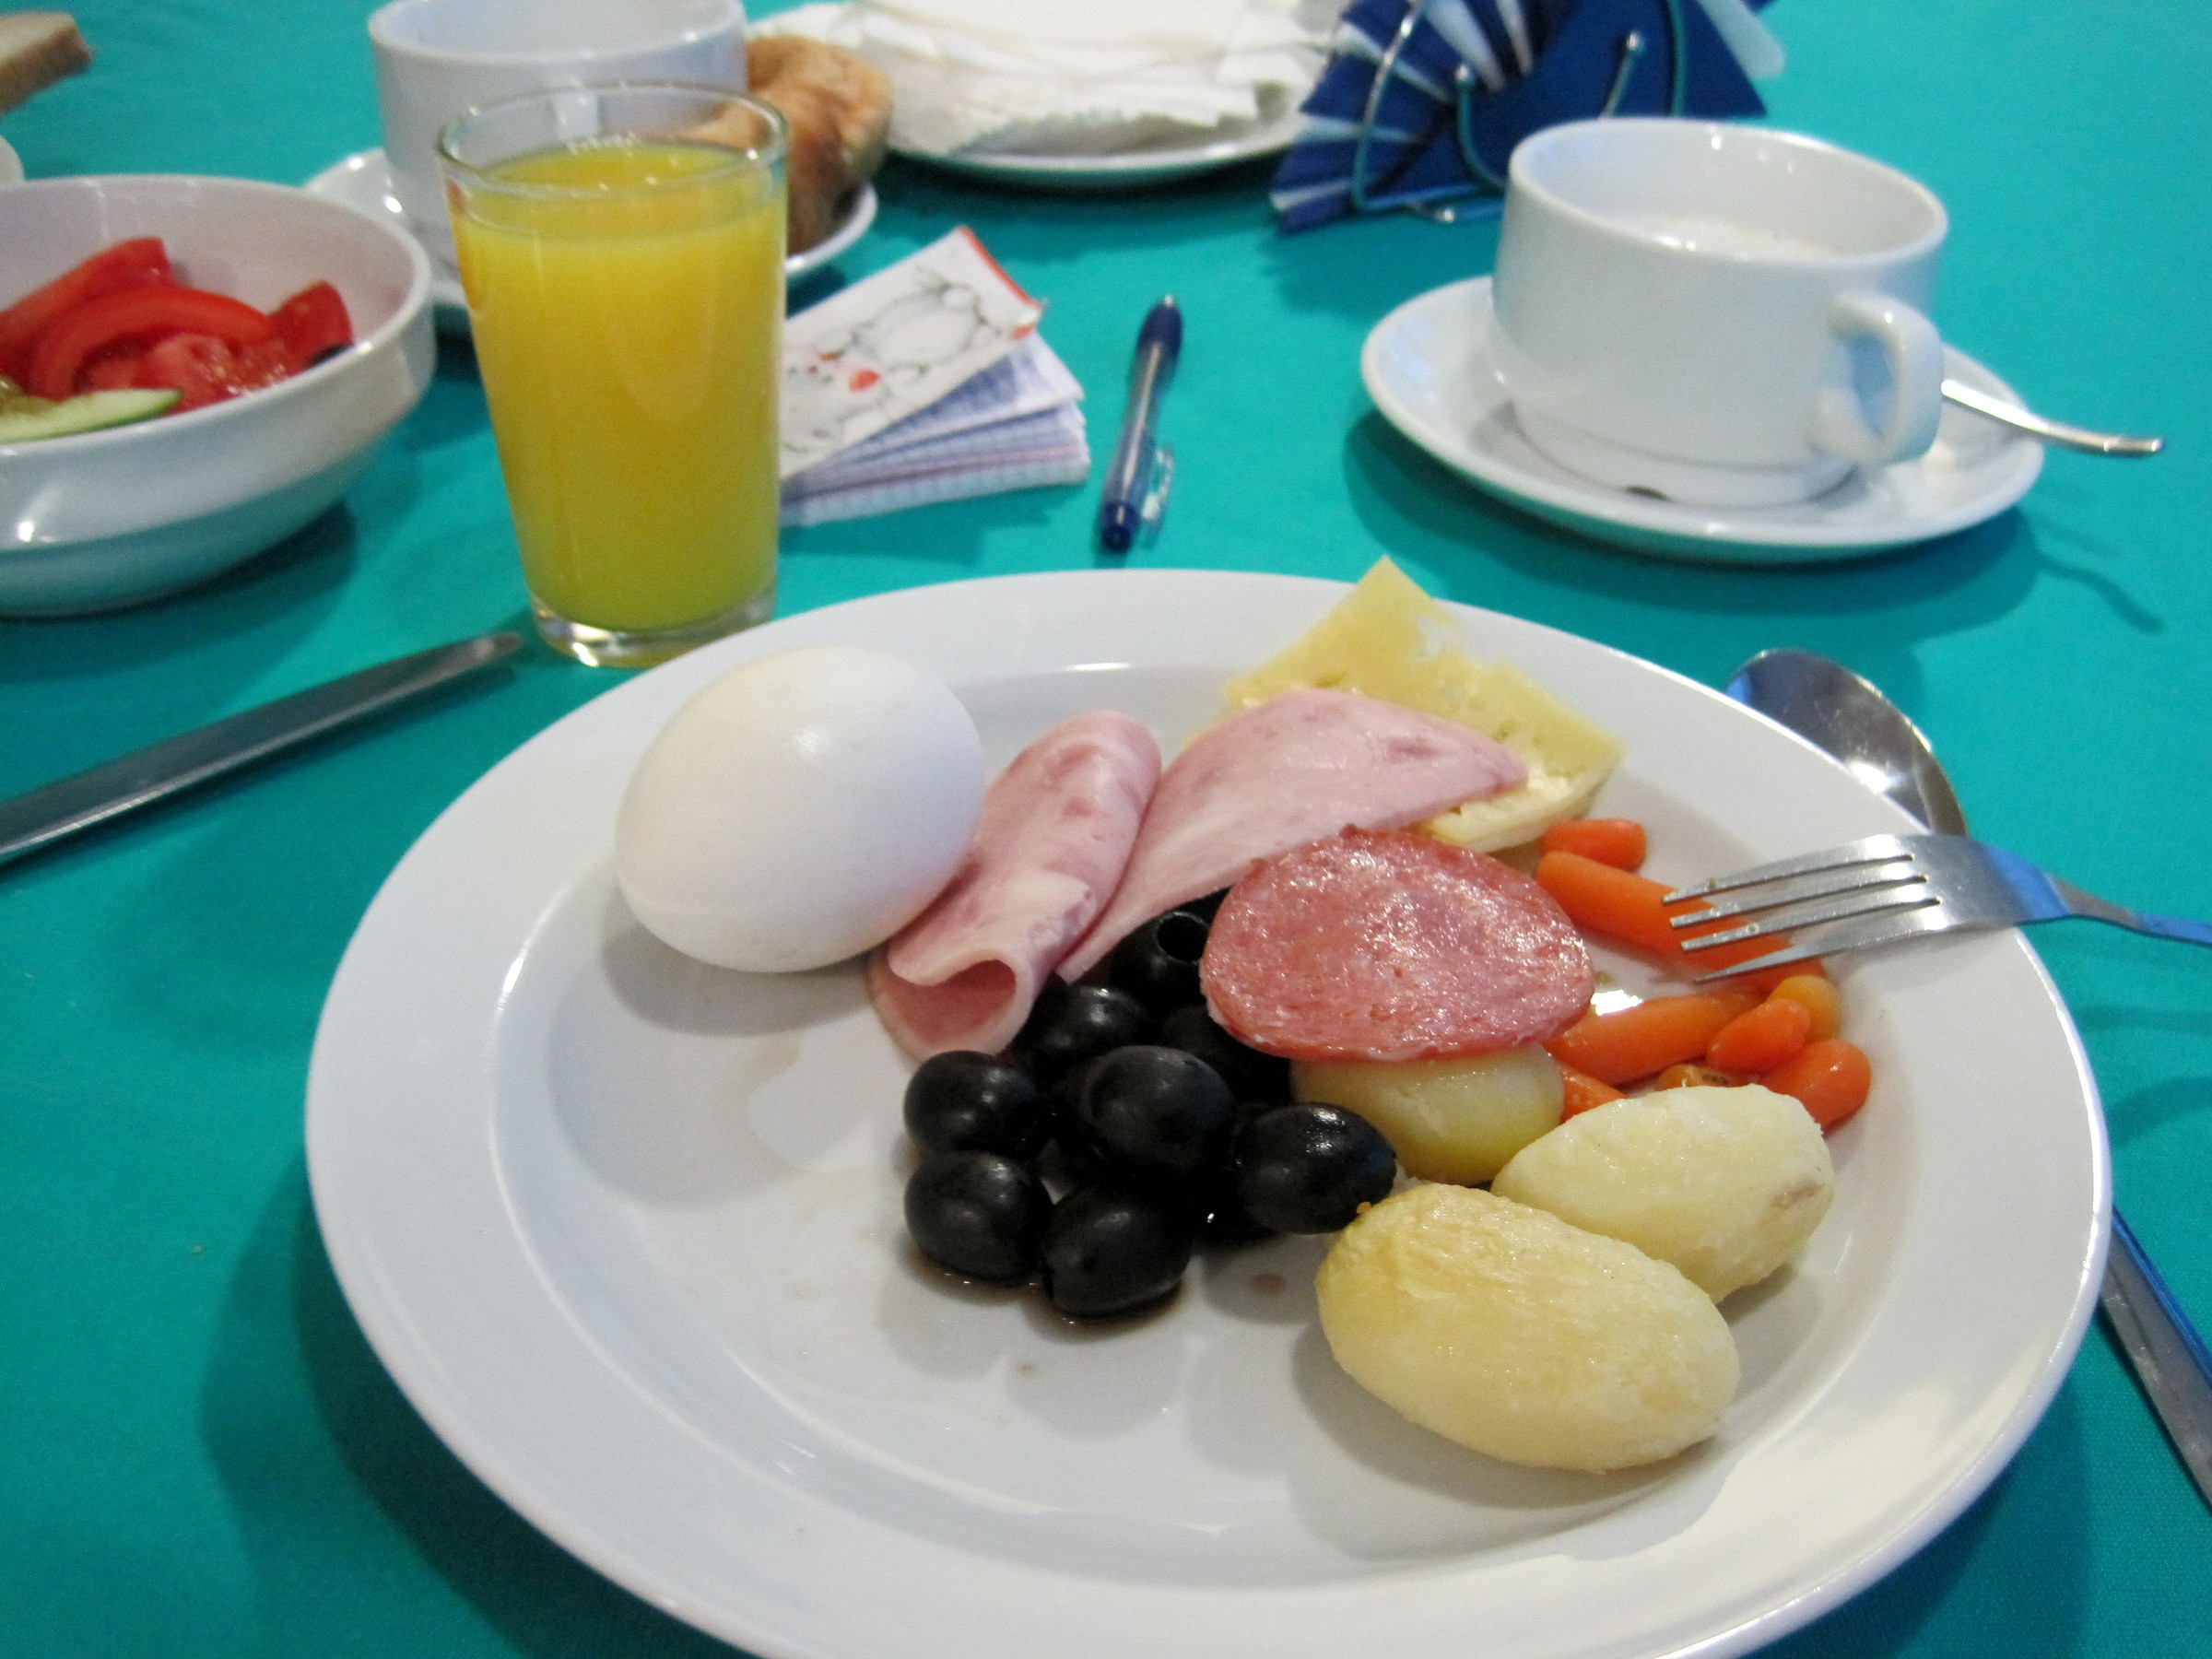 Обед в гостинице. Завтрак в ресторане. Шведский завтрак в отеле. Завтрак в номере отеля.